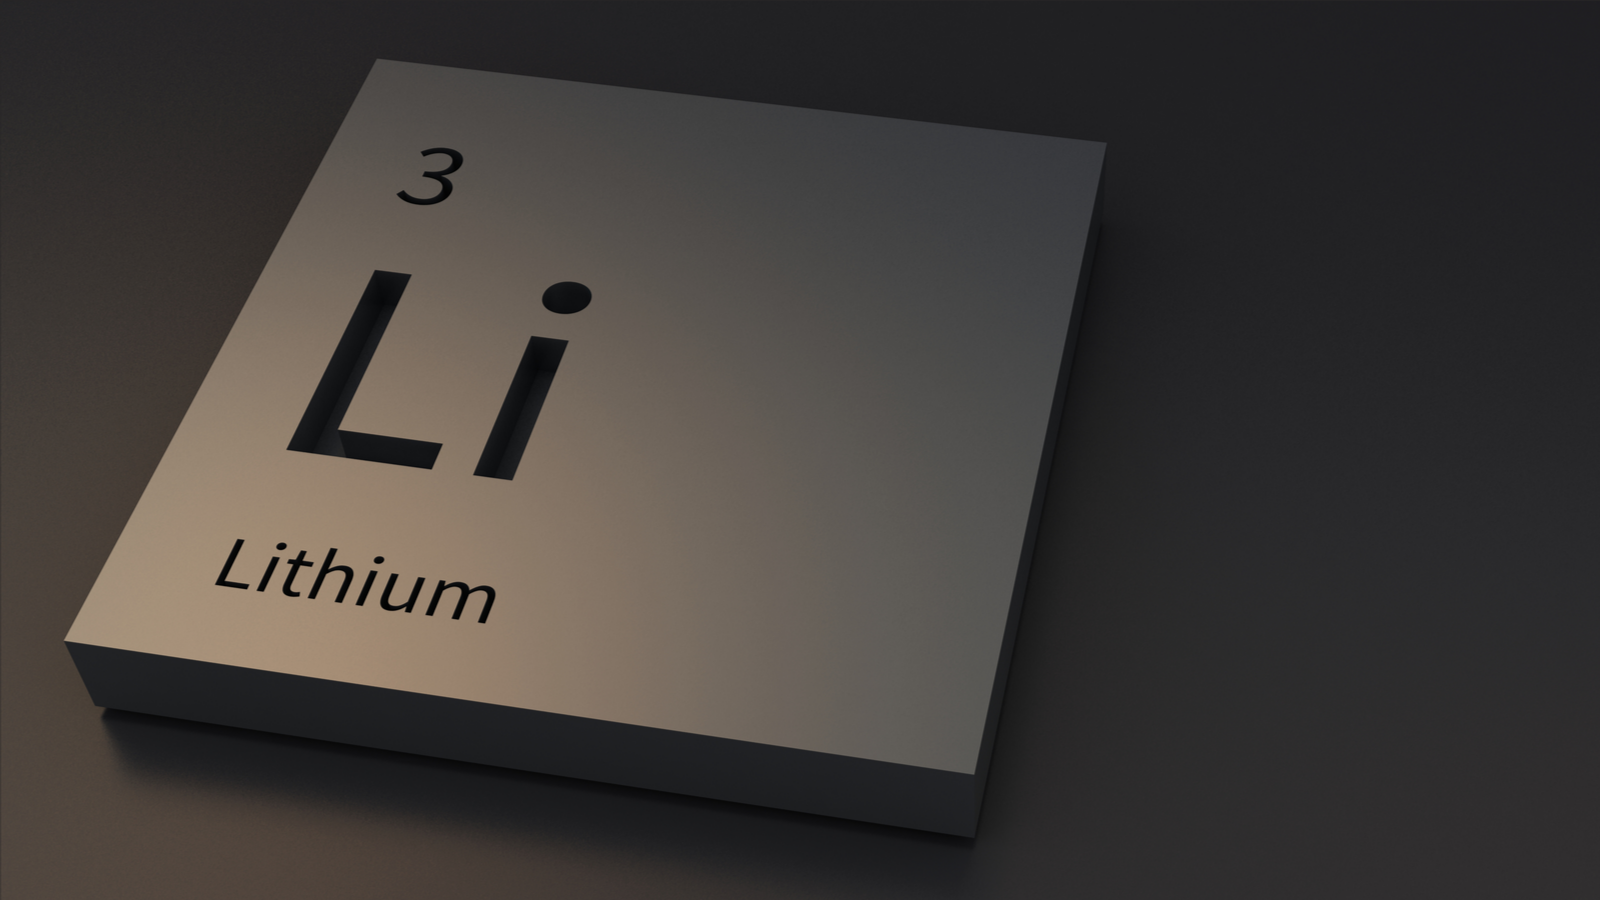 Lithium element on the periodic table. Lithium stocks.